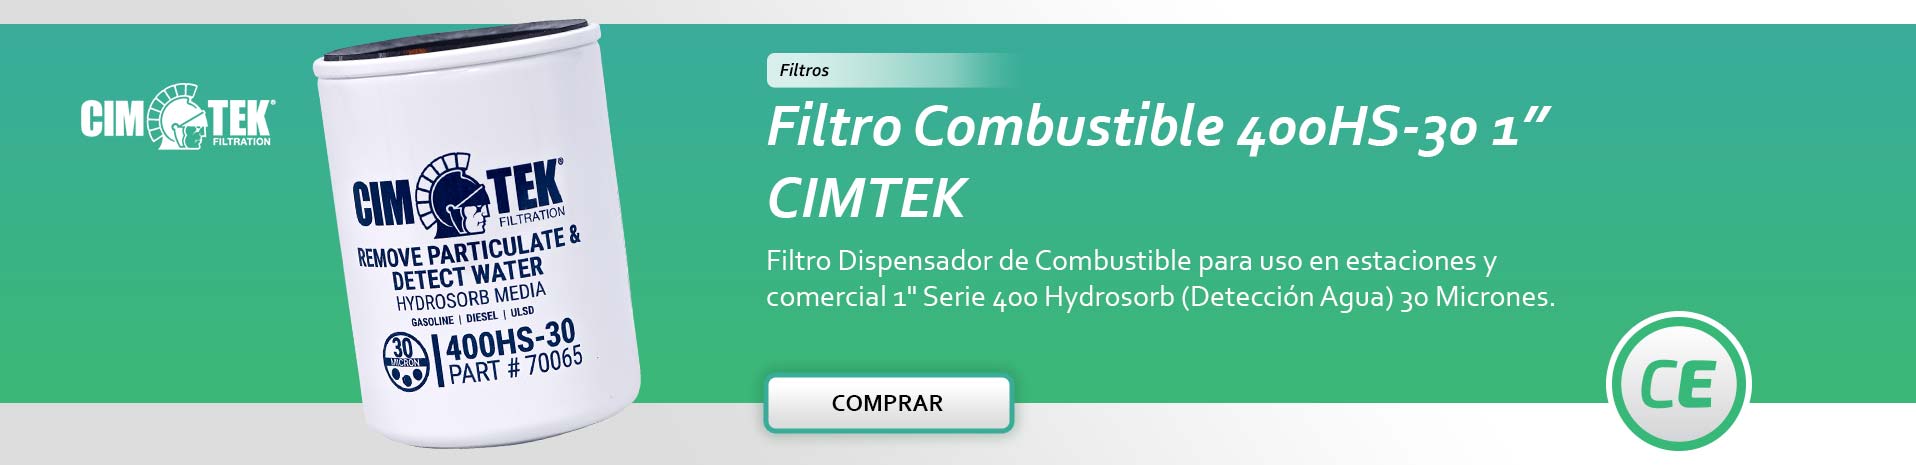 Filtros CIMTEK Dispensadores Estaciones de Combustible  -  Combustible Ecológicos